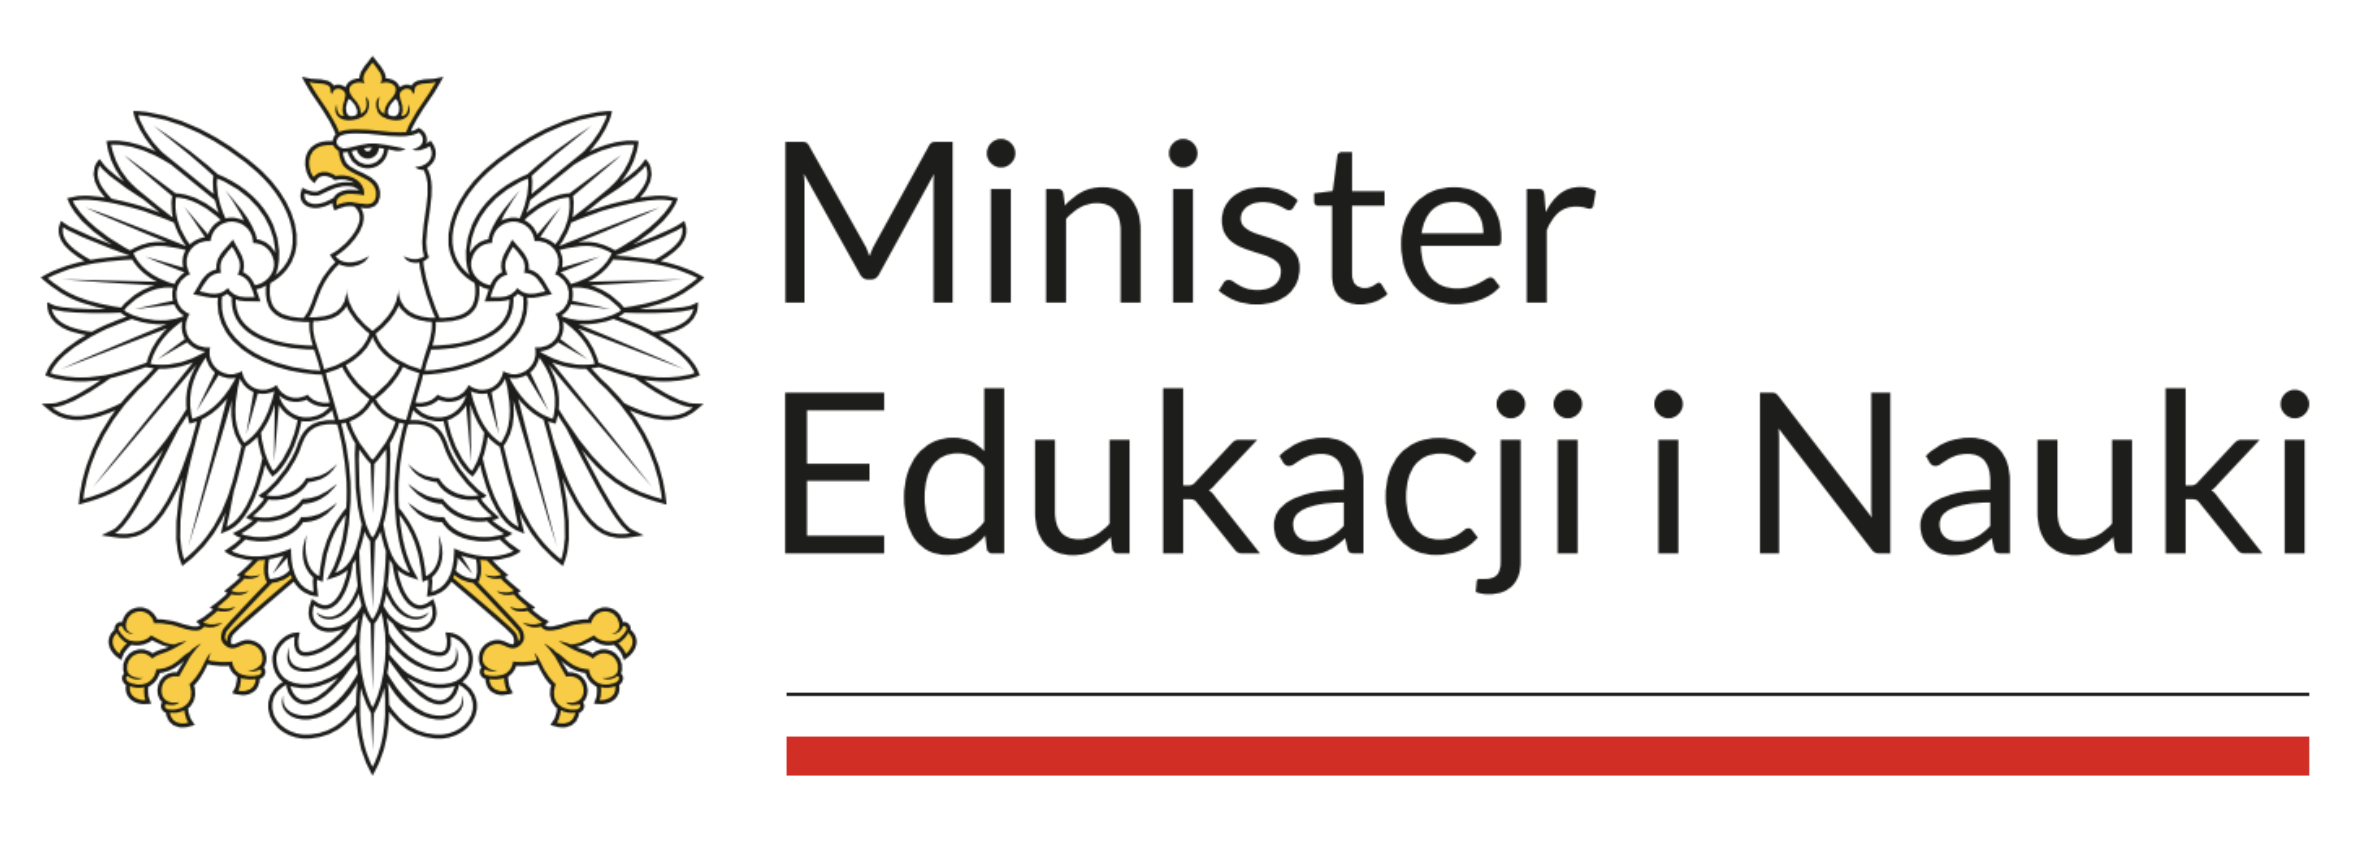 Minister edukacji i nauki kolor